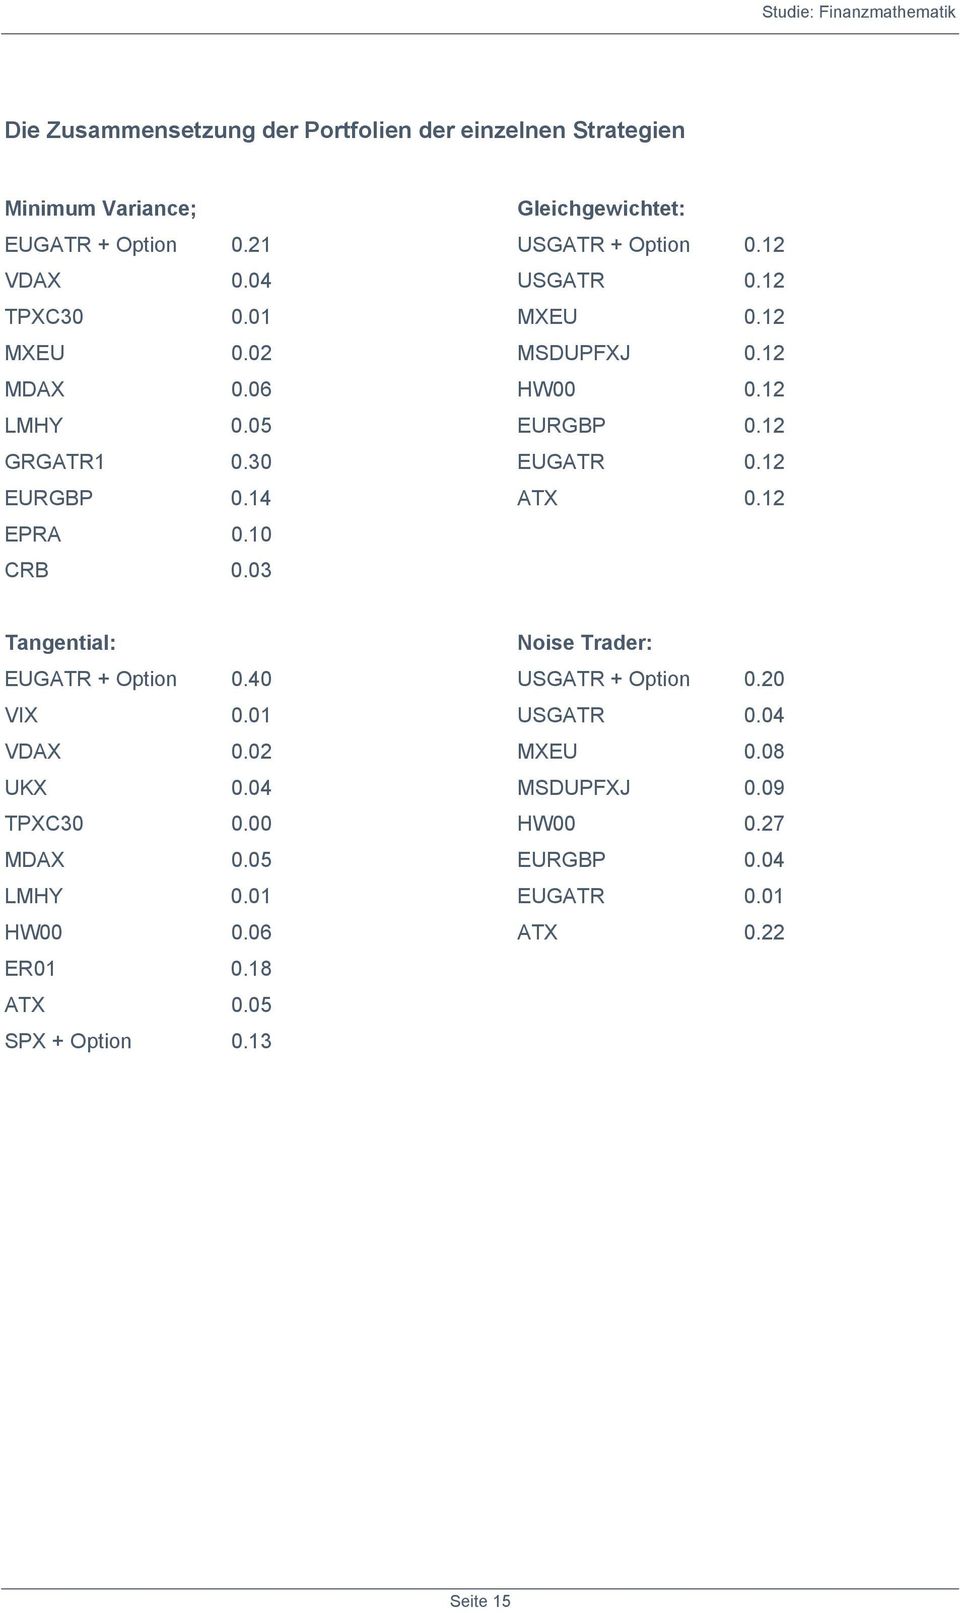 12 EURGBP 0.12 EUGATR 0.12 ATX 0.12 Tangential: EUGATR + Option 0.40 VIX 0.01 VDAX 0.02 UKX 0.04 TPXC30 0.00 MDAX 0.05 LMHY 0.01 HW00 0.